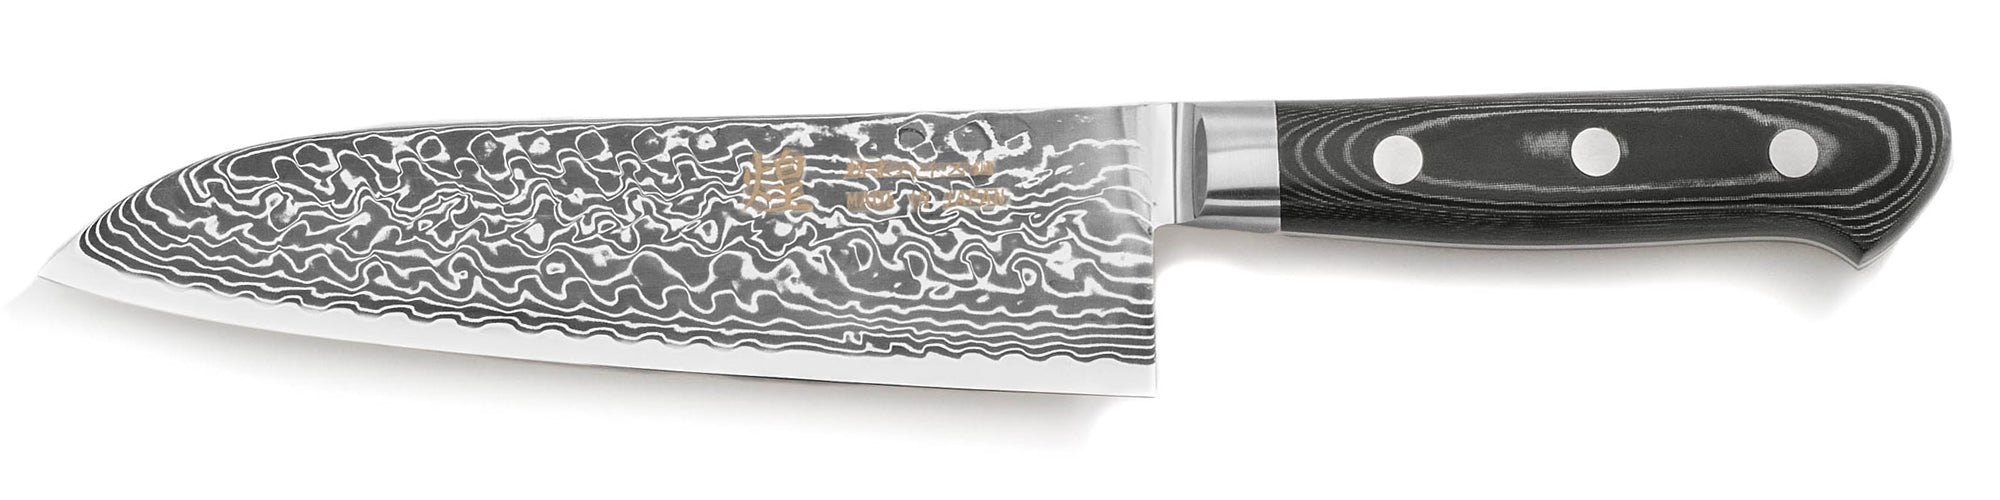 Kirameki powder metallurgy steel damascus santoku knife